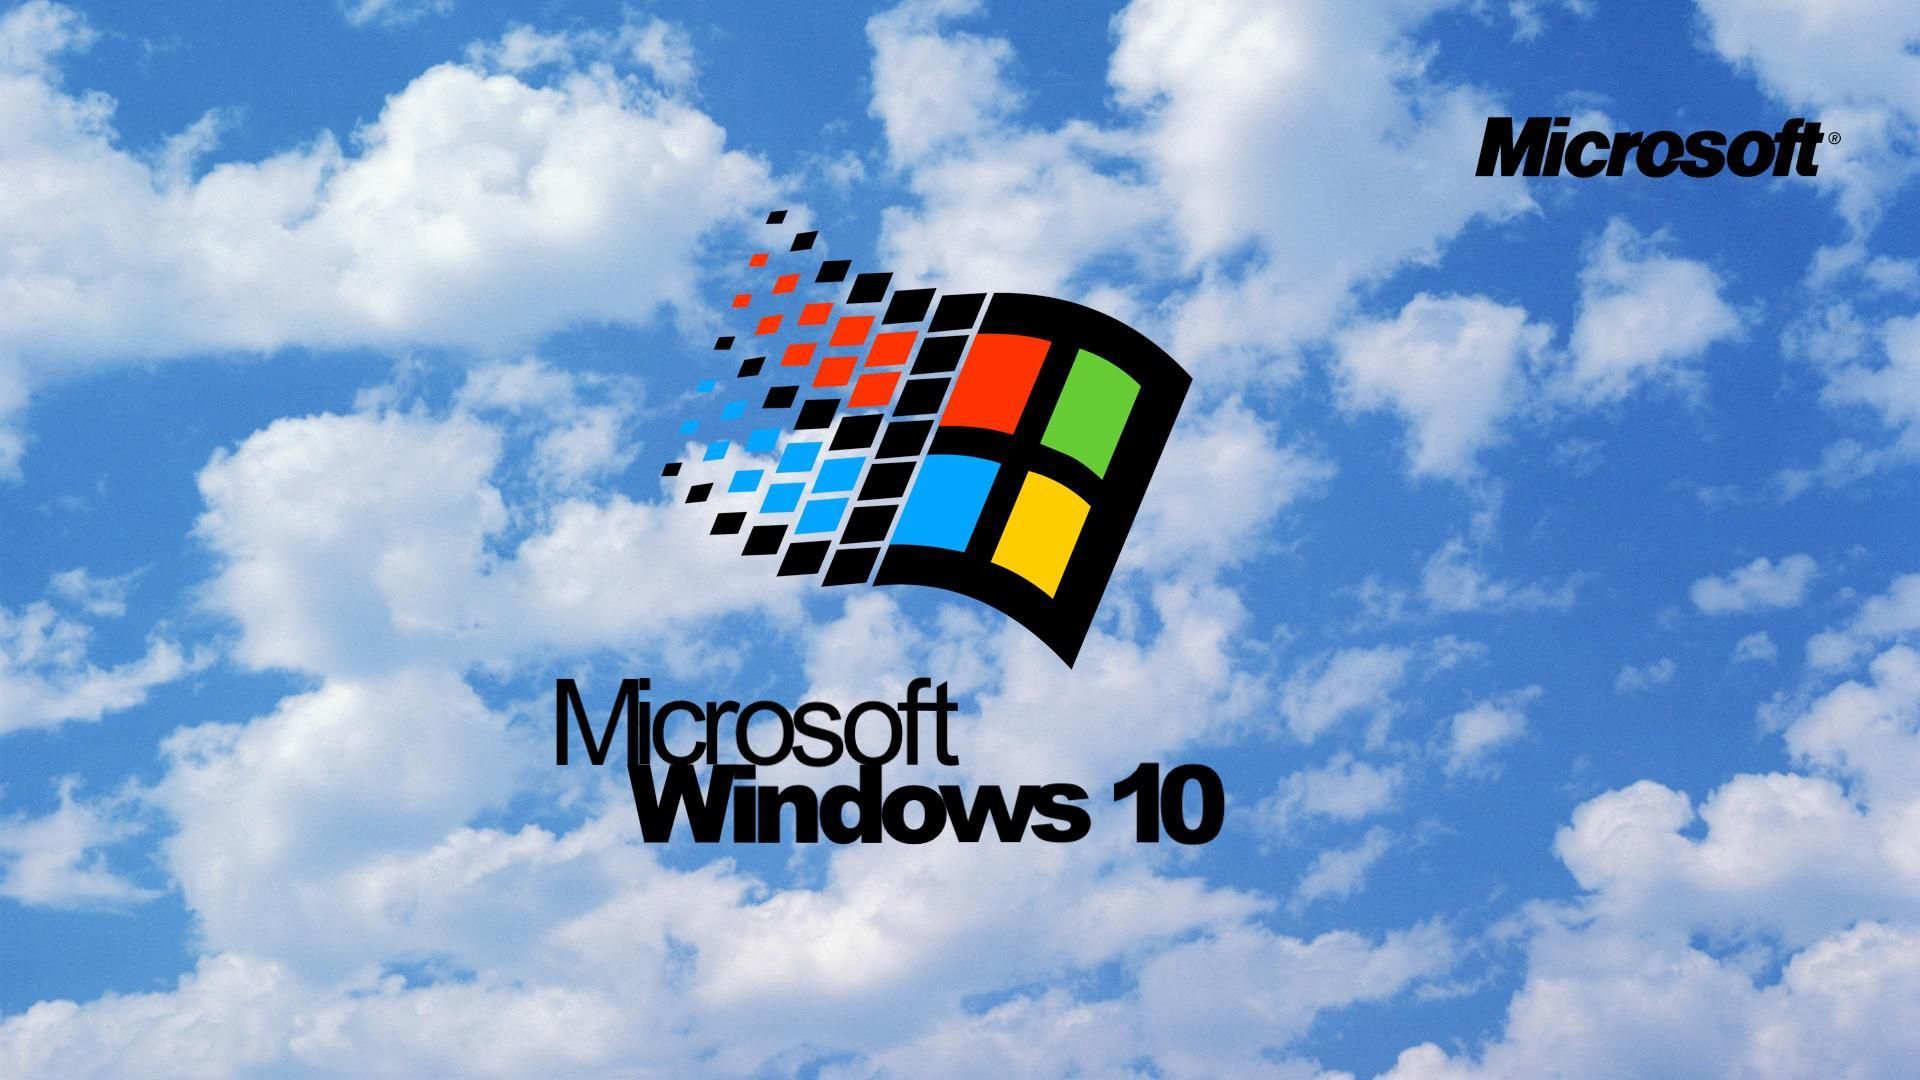 Windows 10 wallpaper for your desktop - Windows 98